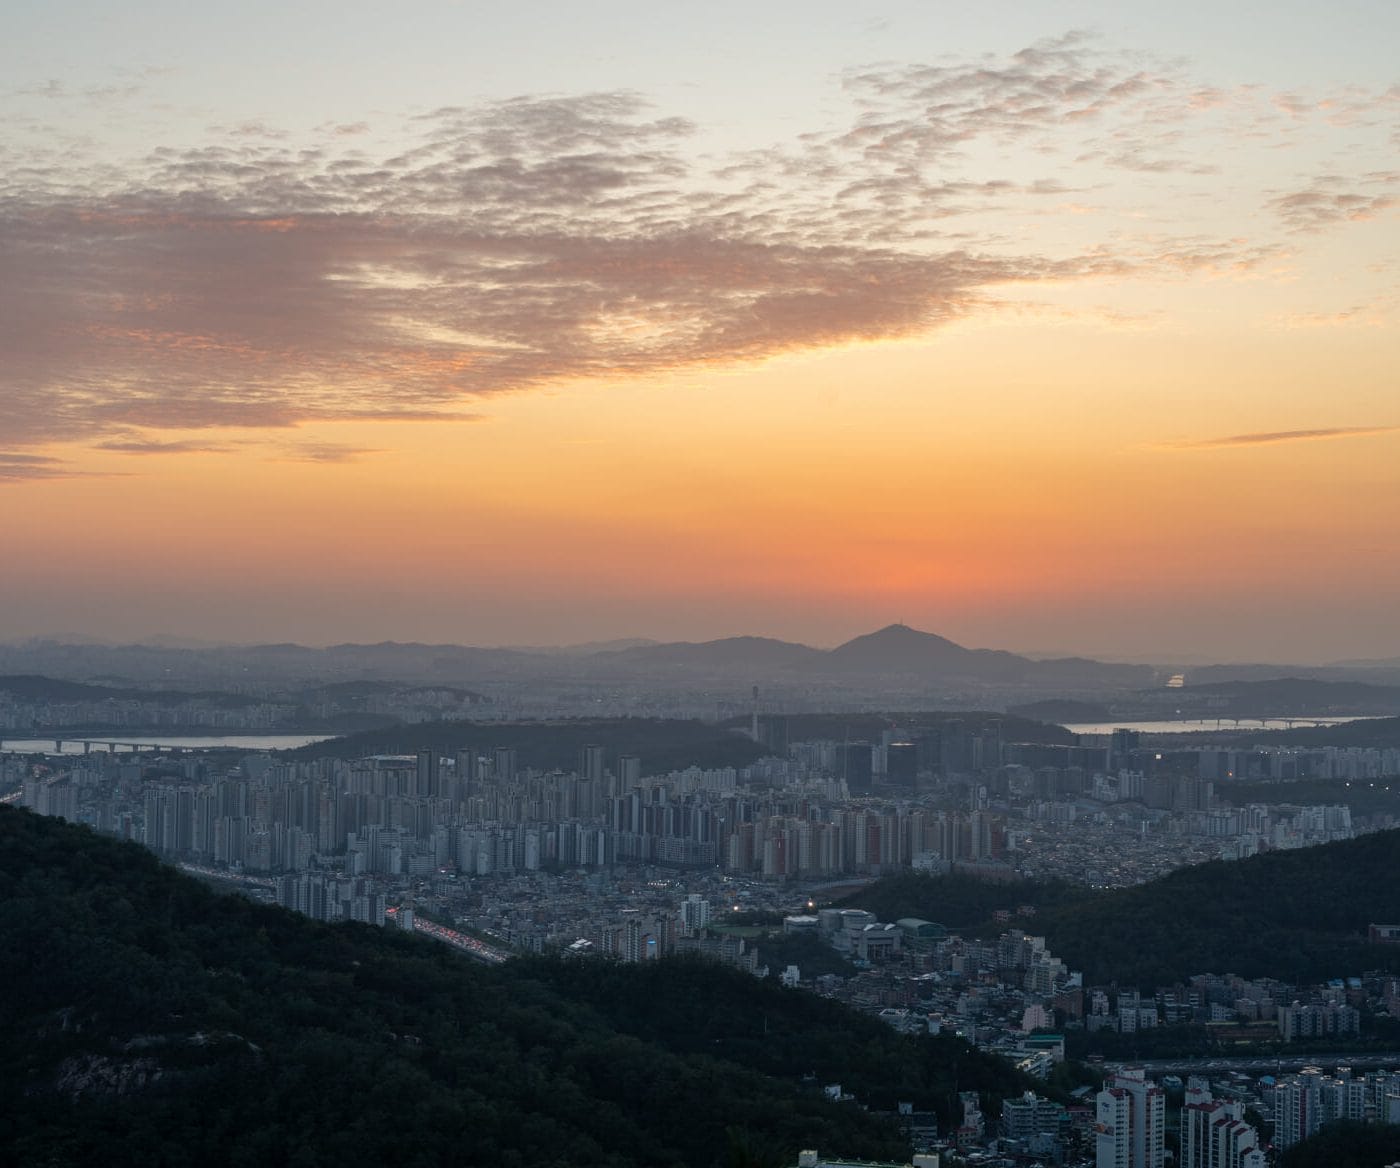 Sunset in Seoul from Inwangsan